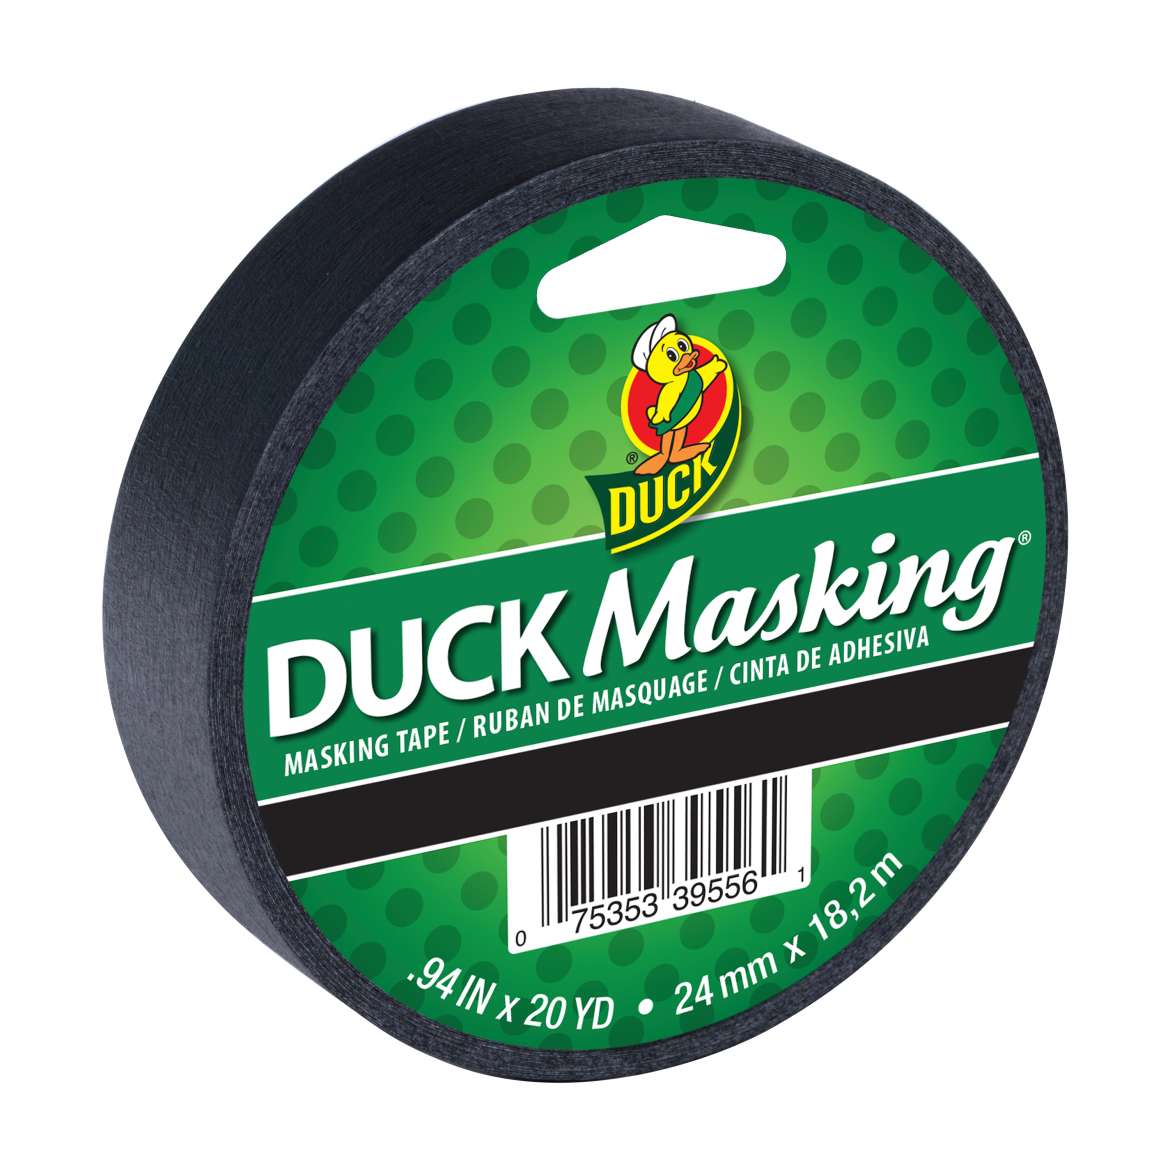 Duck Masking® Brand Masking Tape - Black, .94 in. x 20 yd.